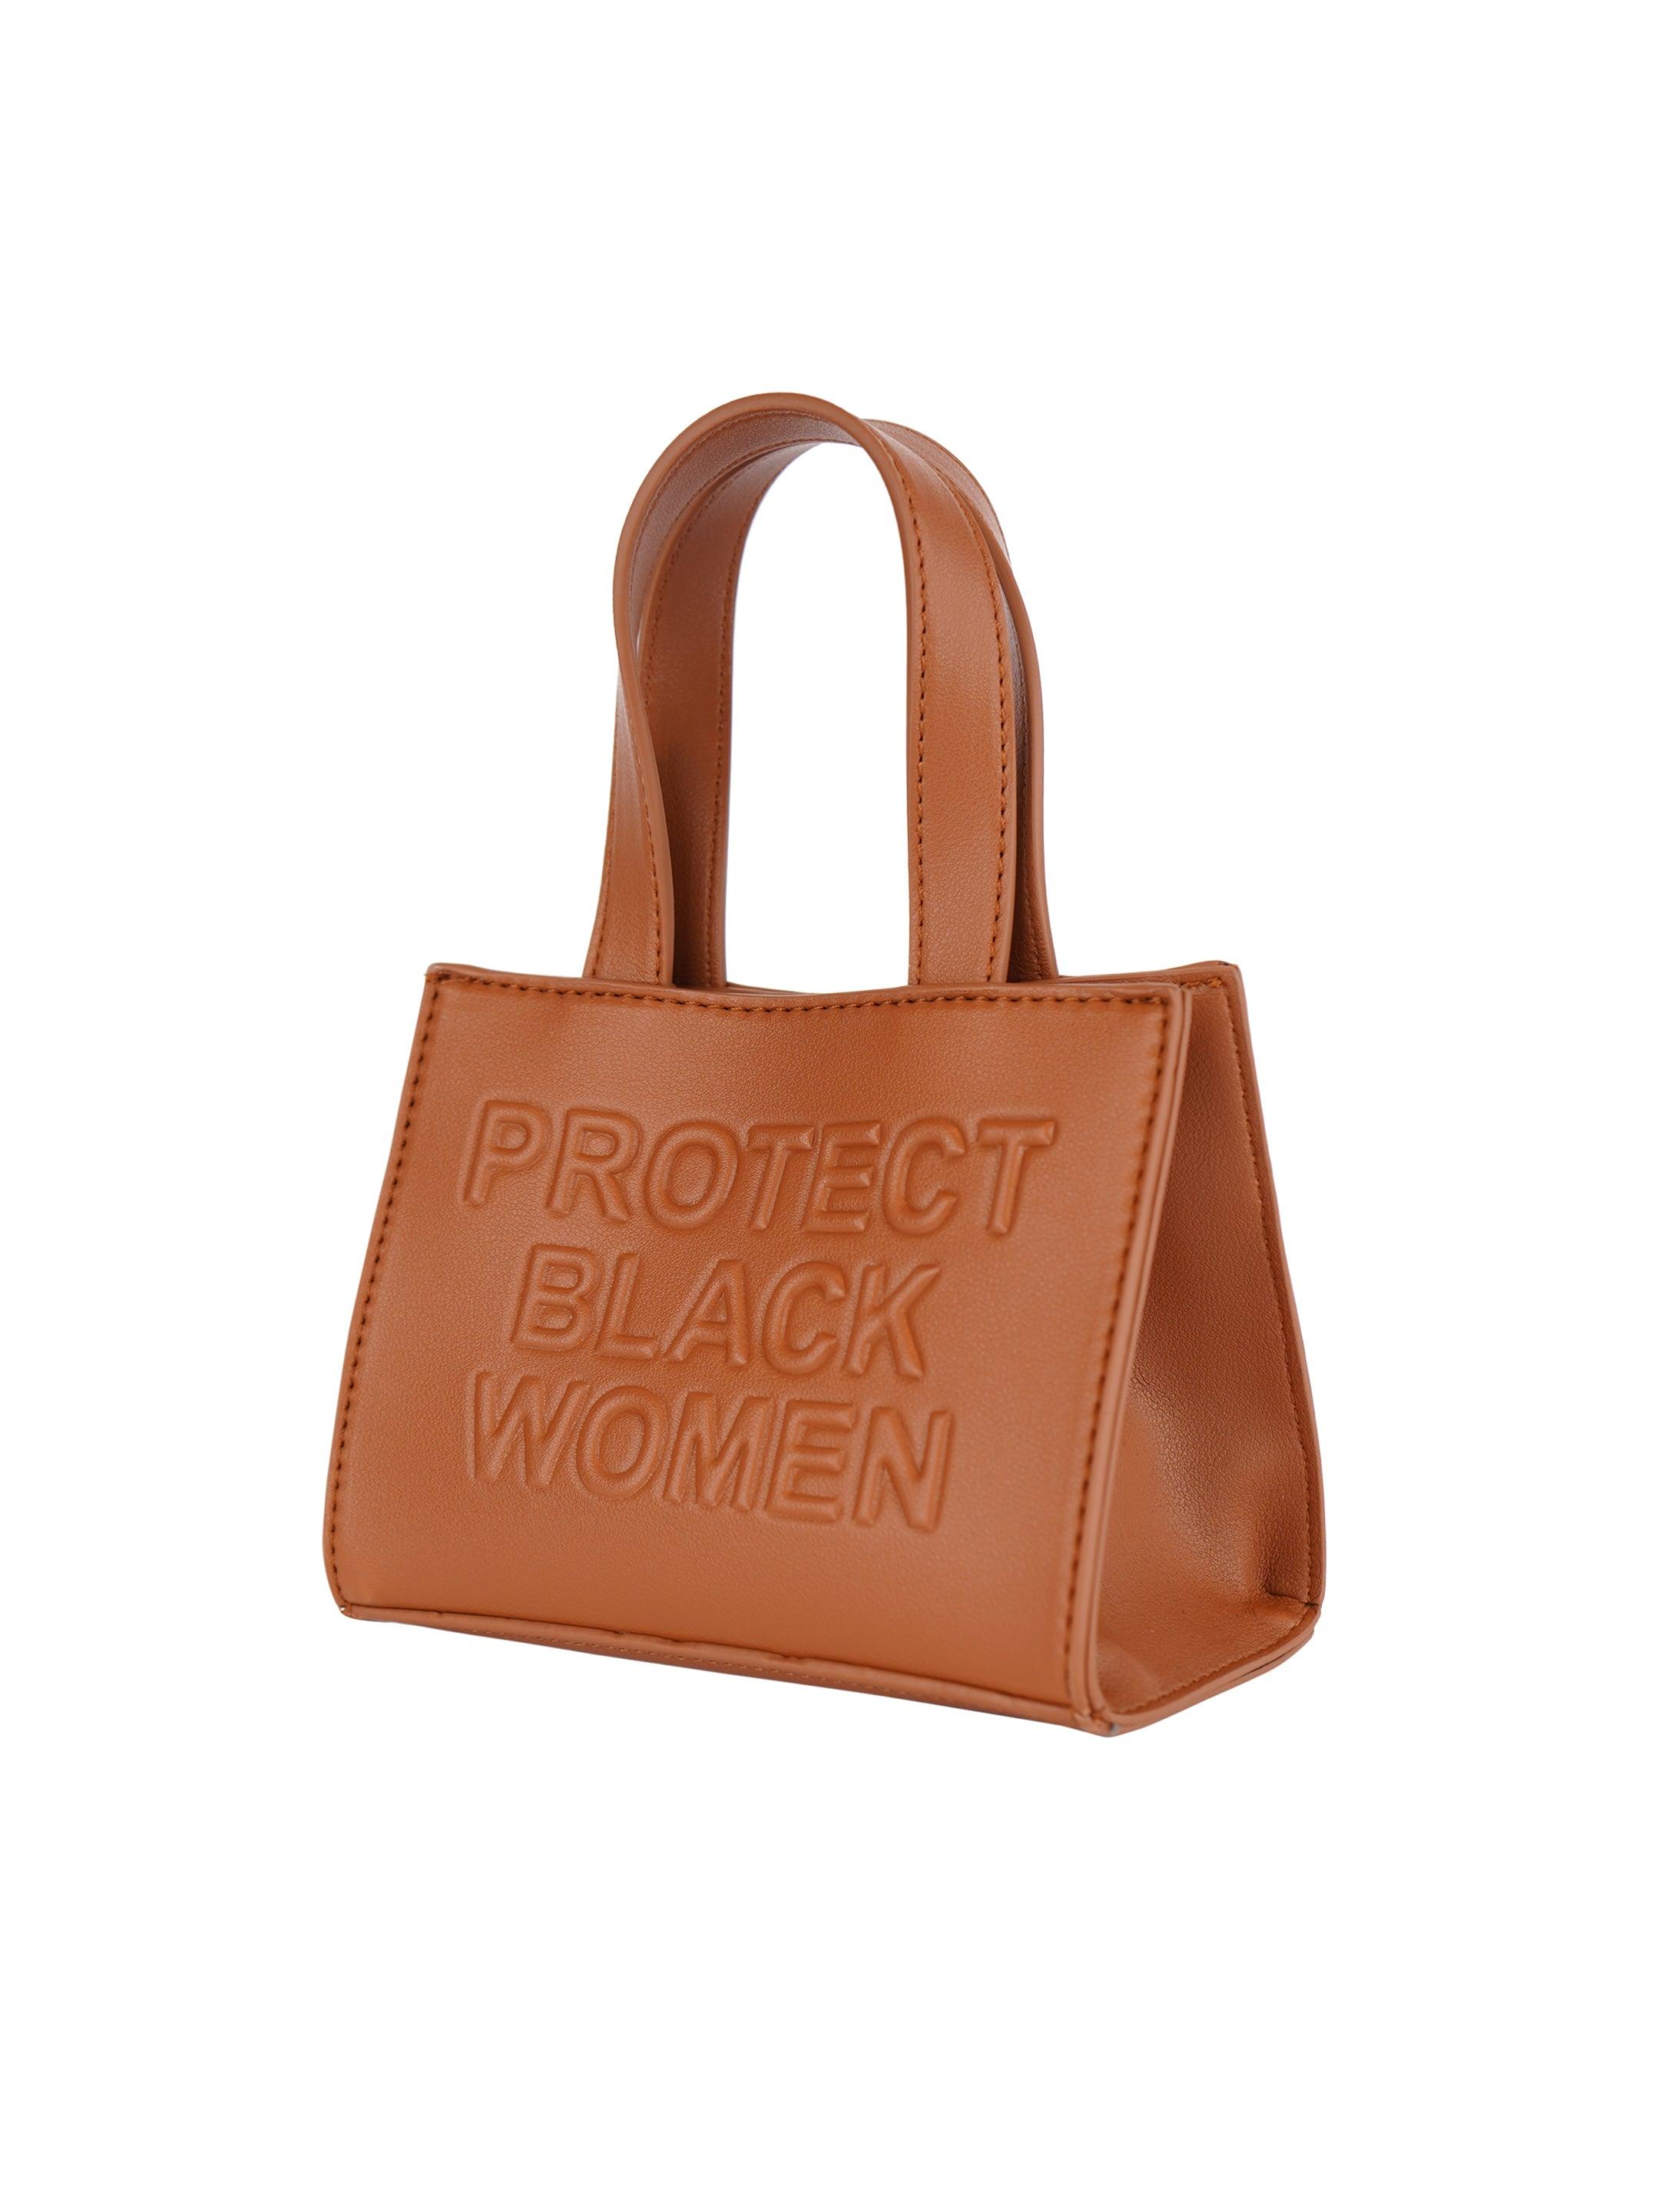 PBW - Vegan Leather Brown Bag